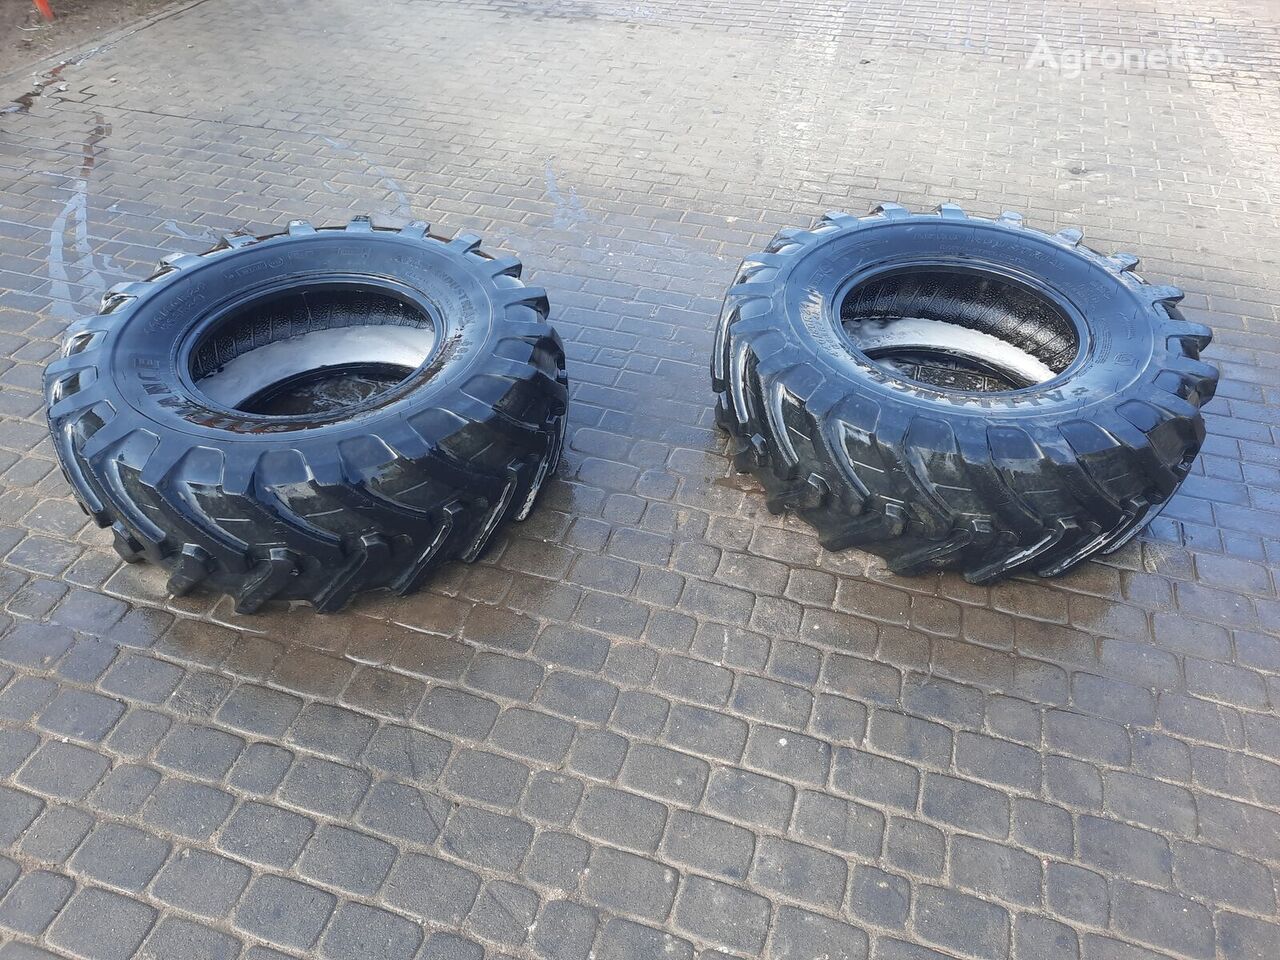 Alliance (16.9 R24) tractor tire